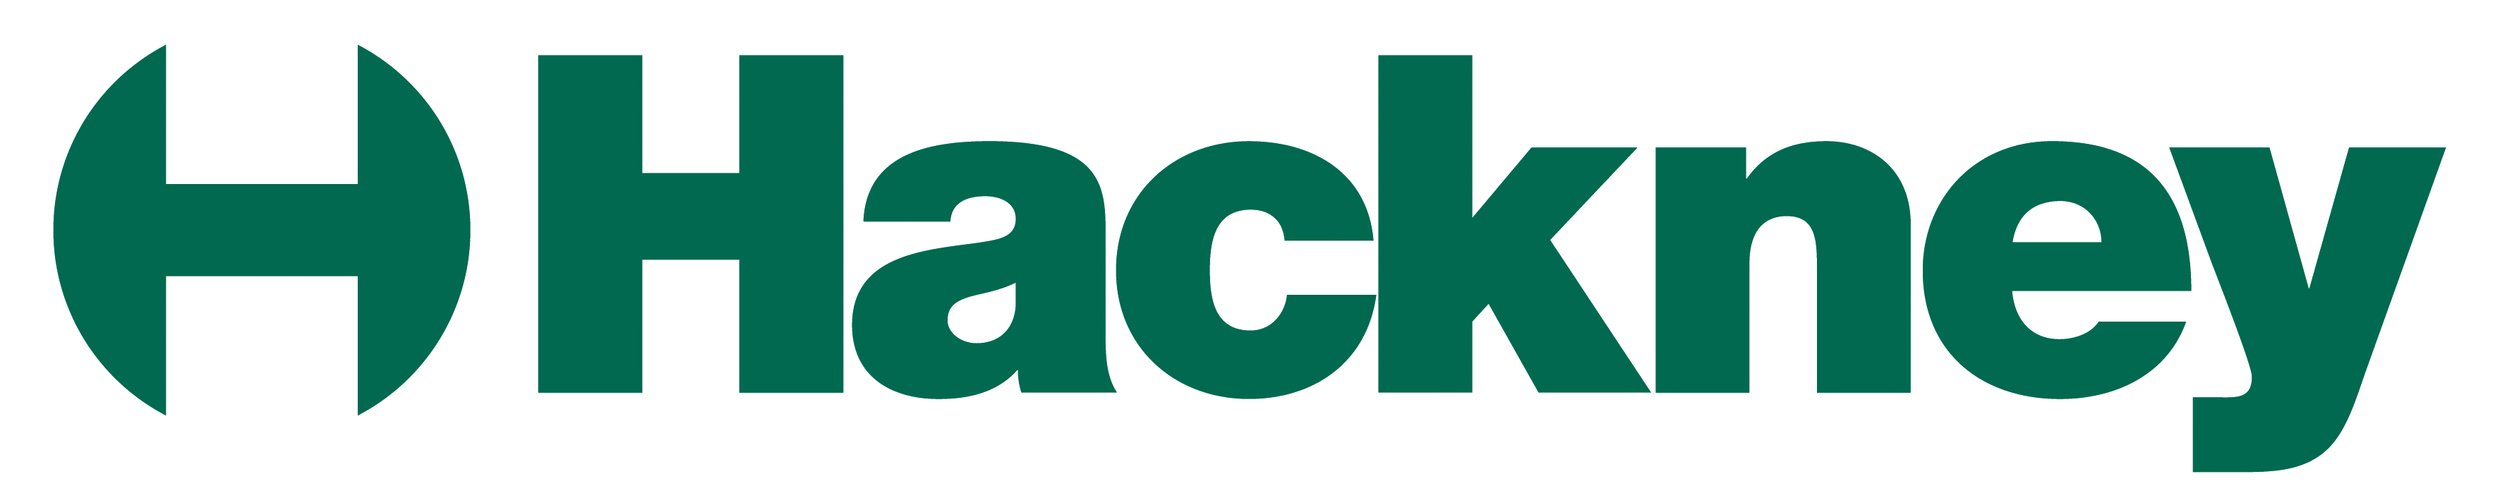 Hackney-Council-logo.jpeg